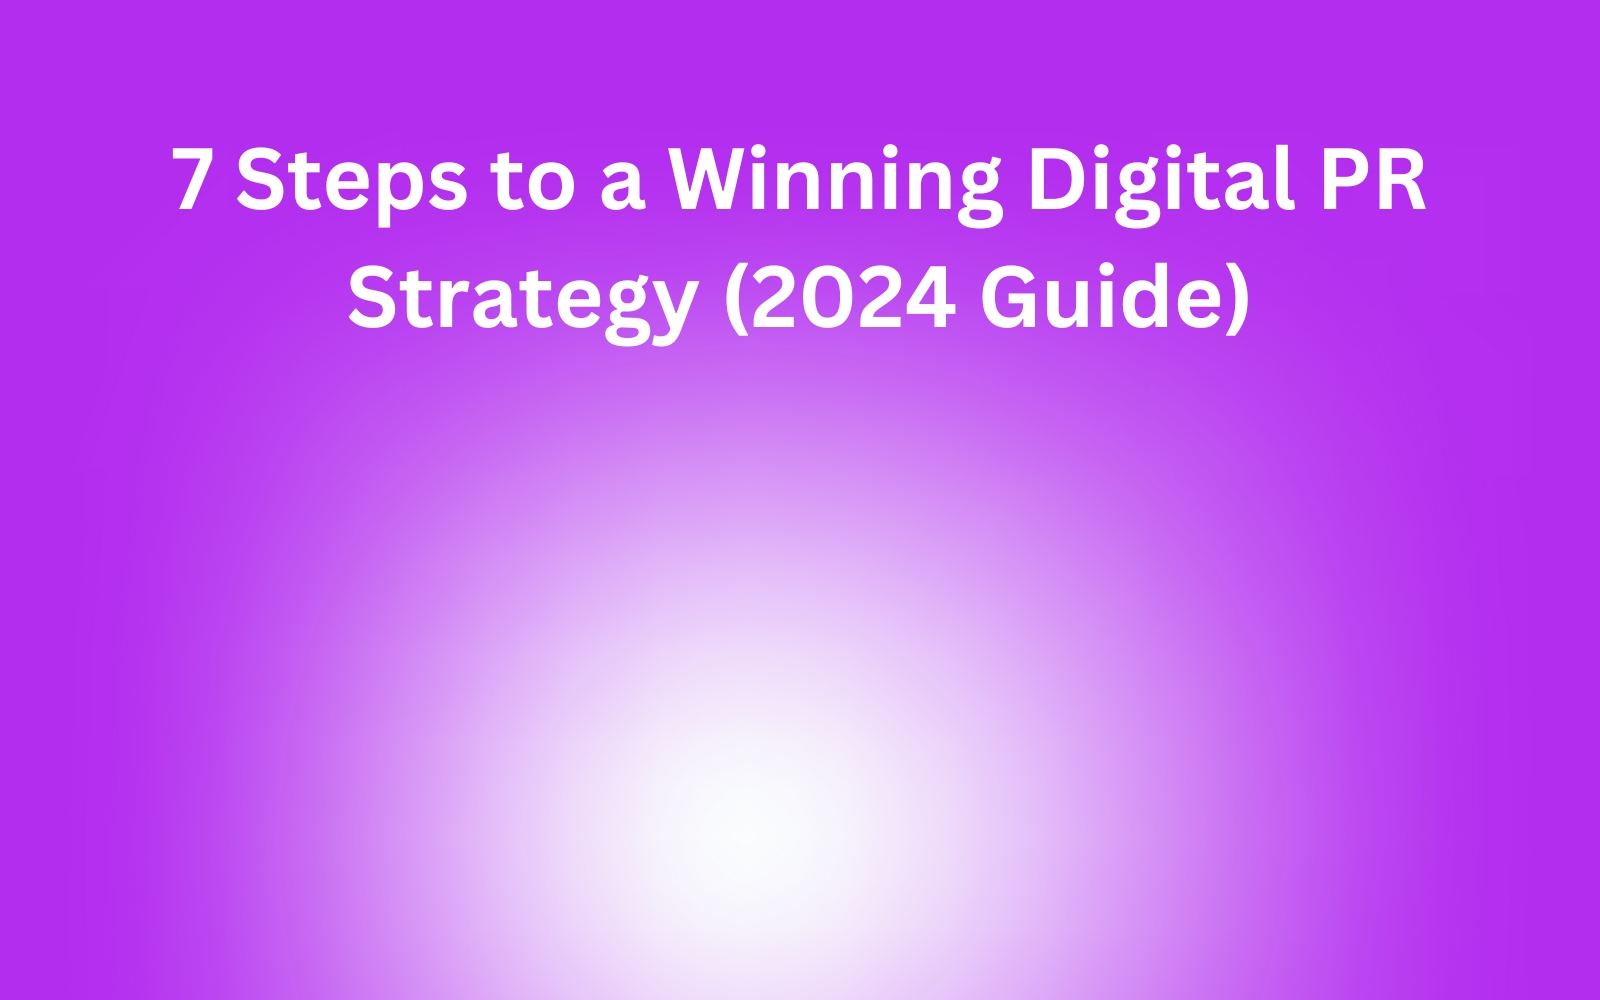 Digital PR Strategy Guide